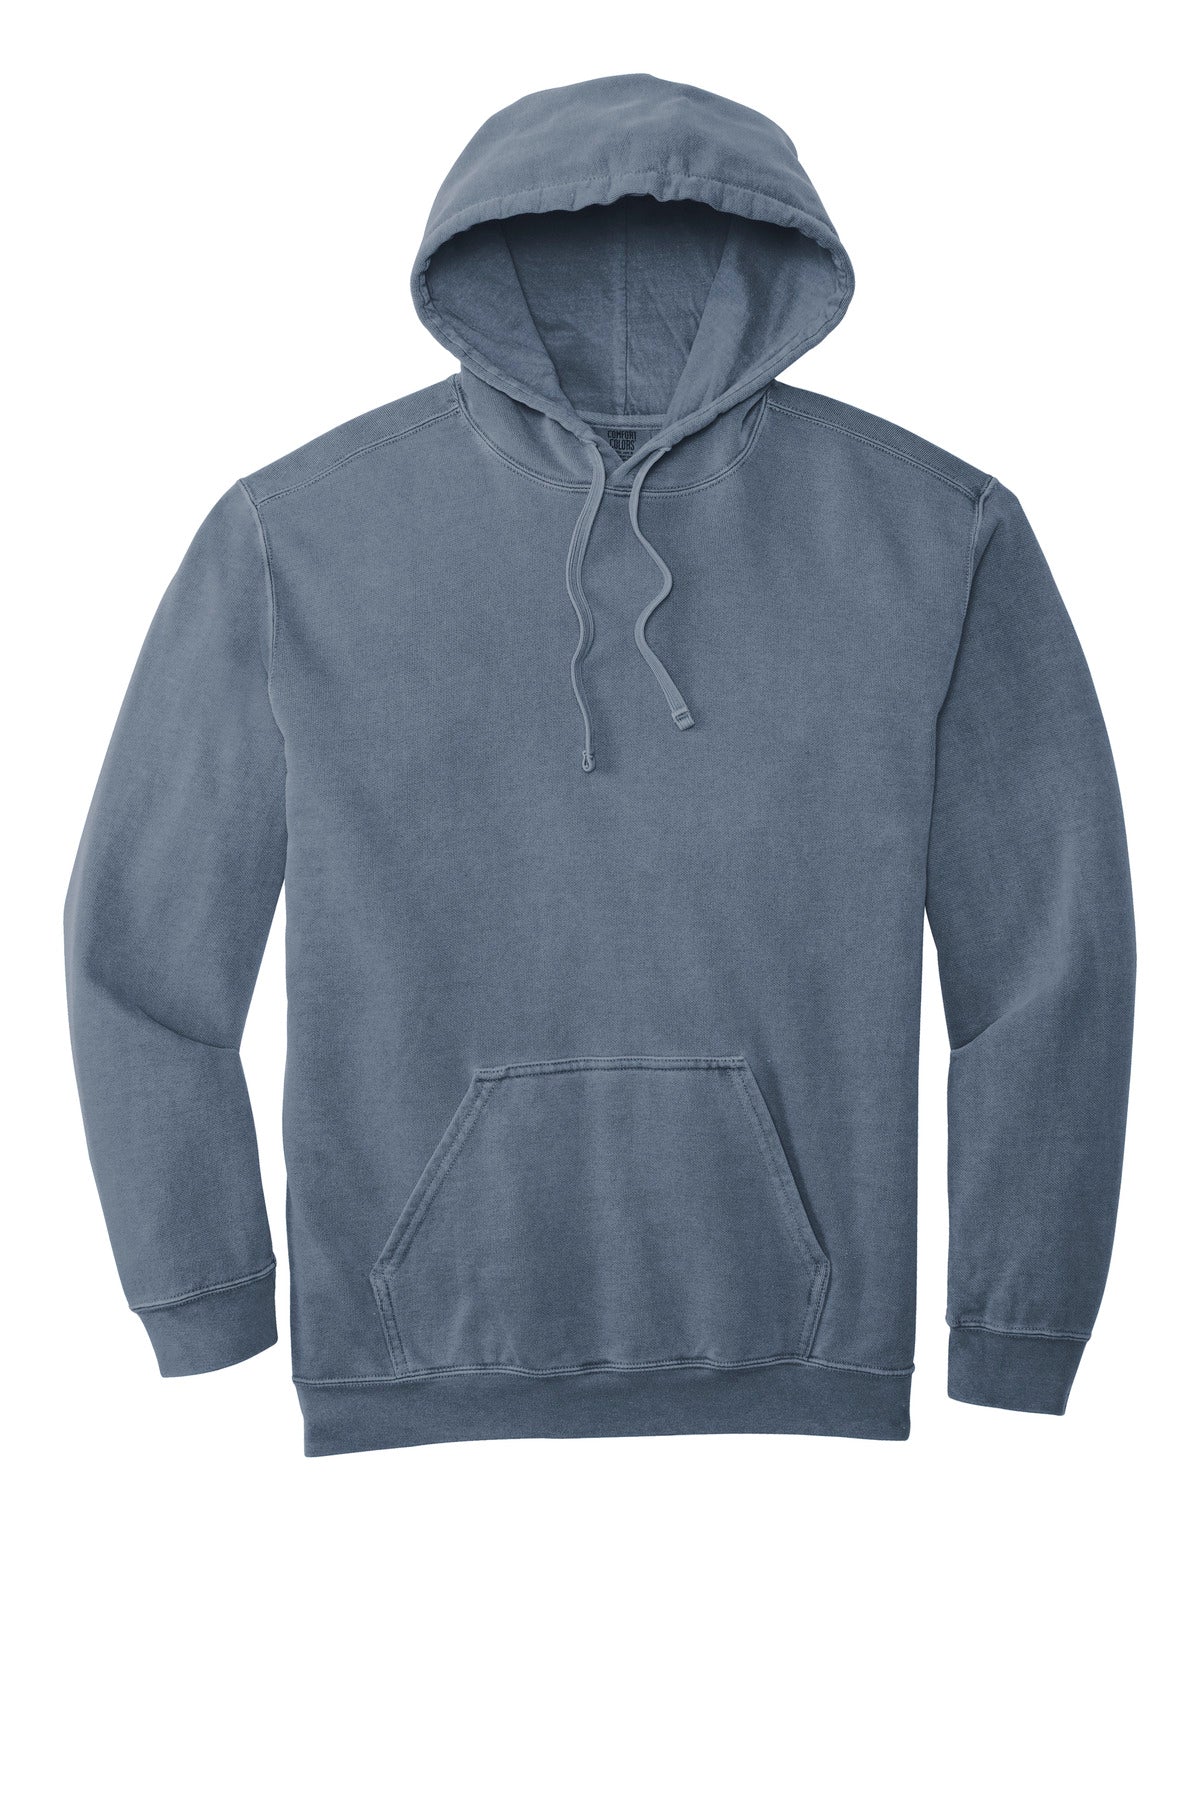 COMFORT COLORS ® Ring Spun Hooded Sweatshirt